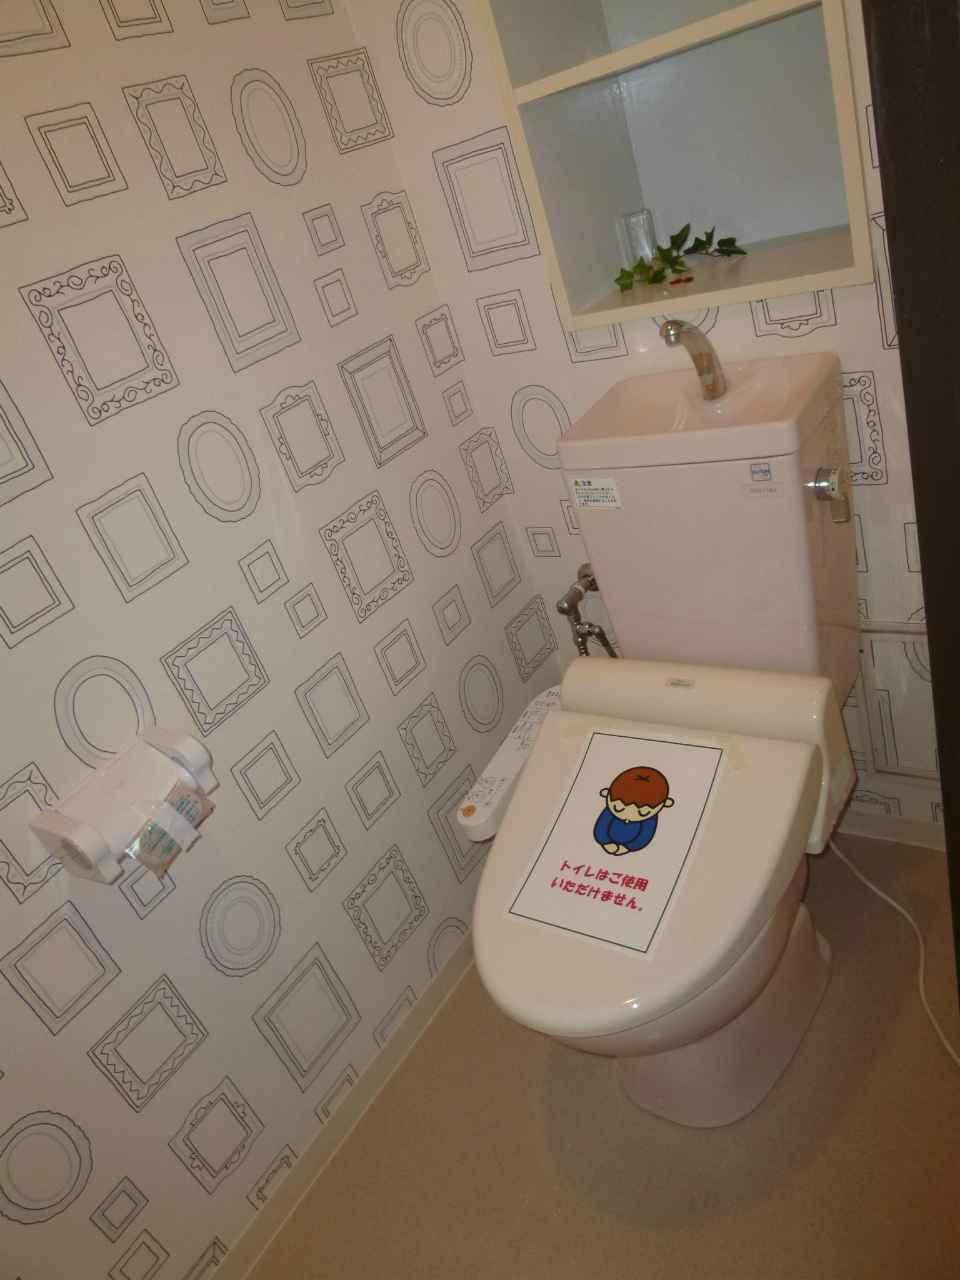 Toilet. Warm water washing toilet seat had made